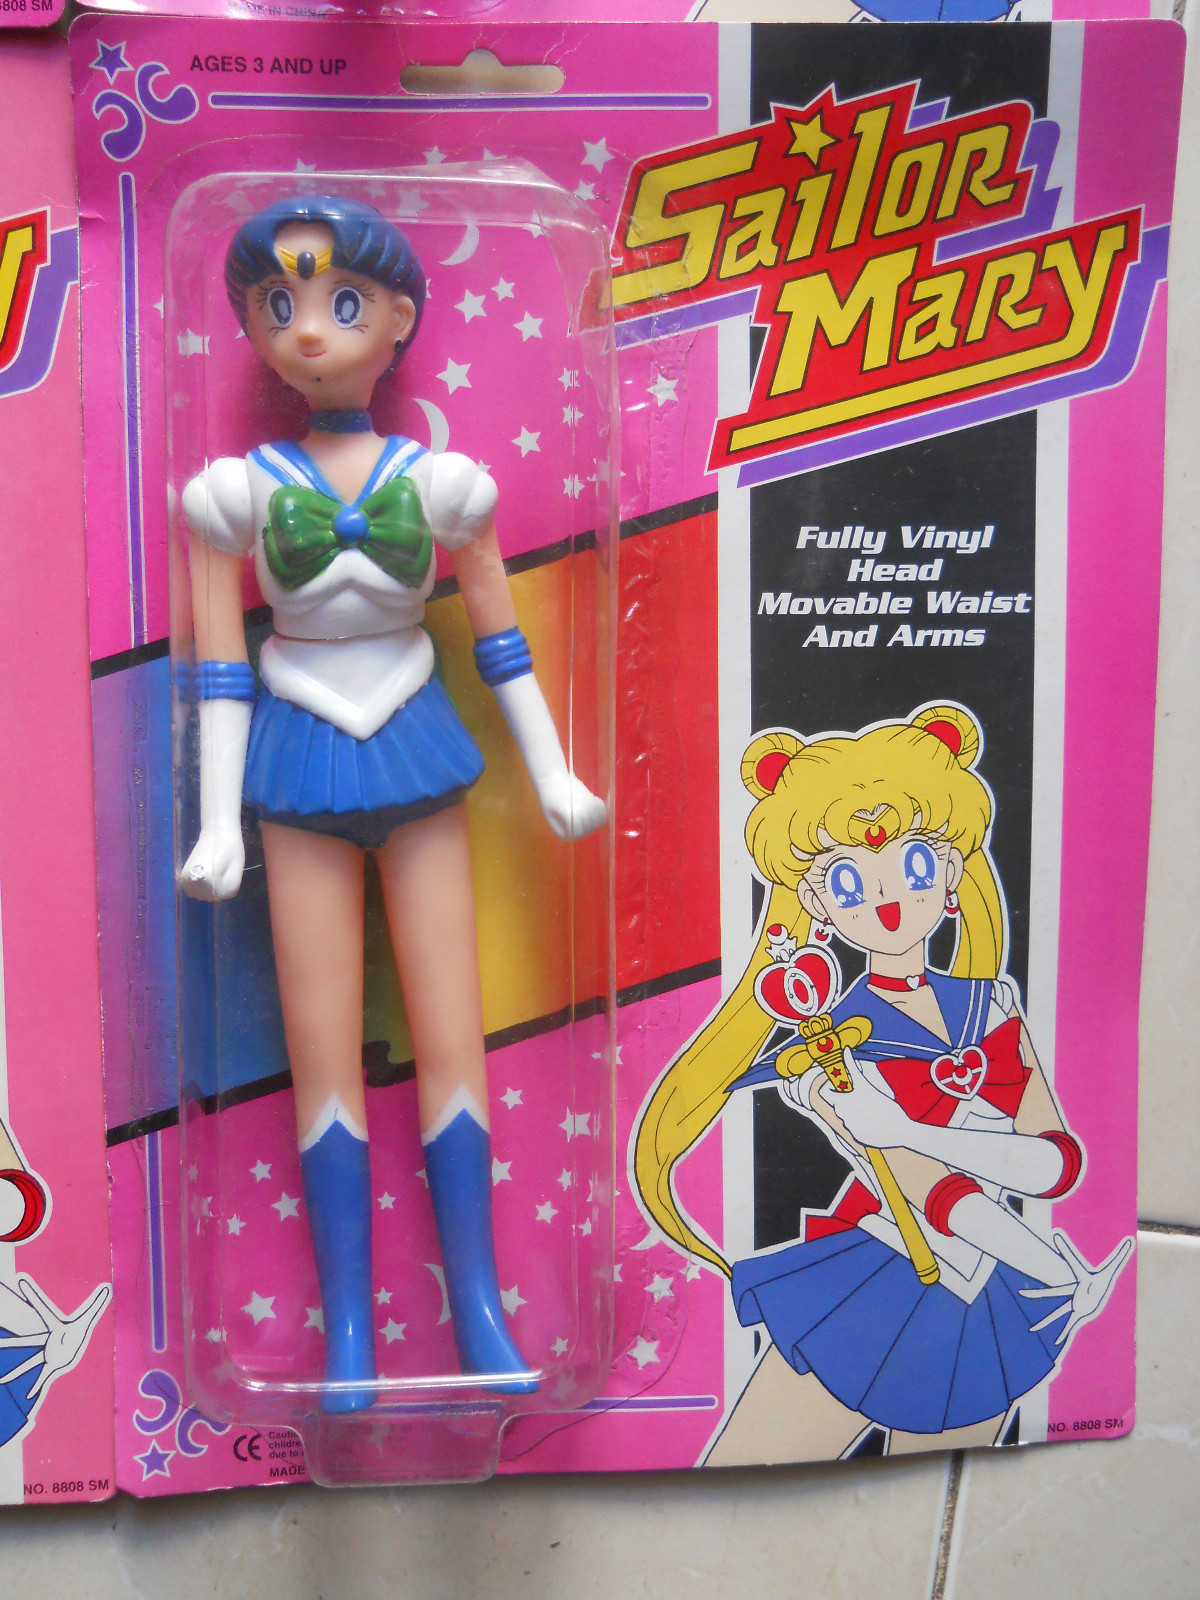 Moon Sisters Presents: Sailor Mary Bootlegs